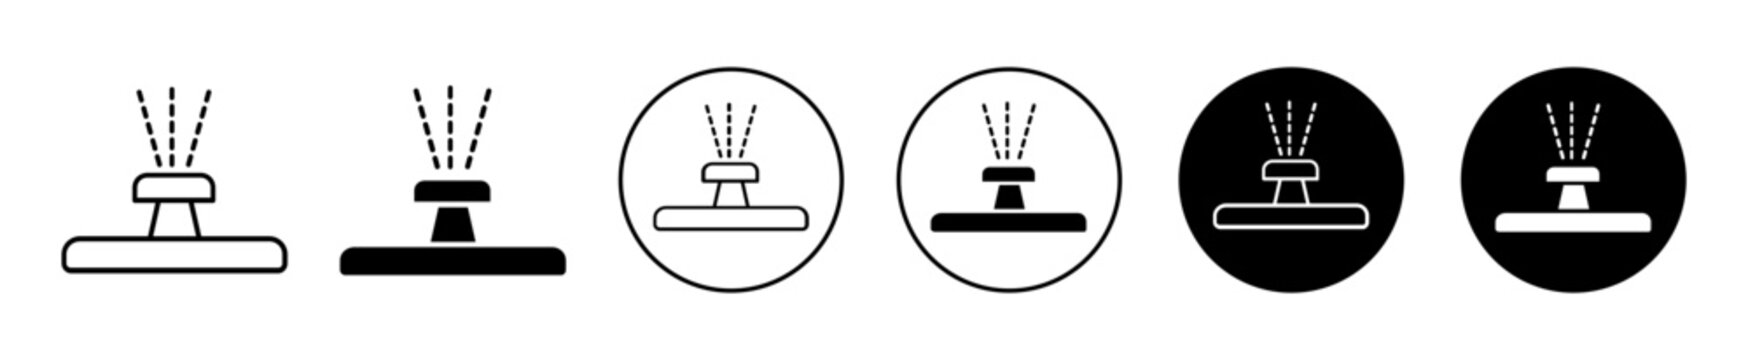 Irrigation vector icon illustration set